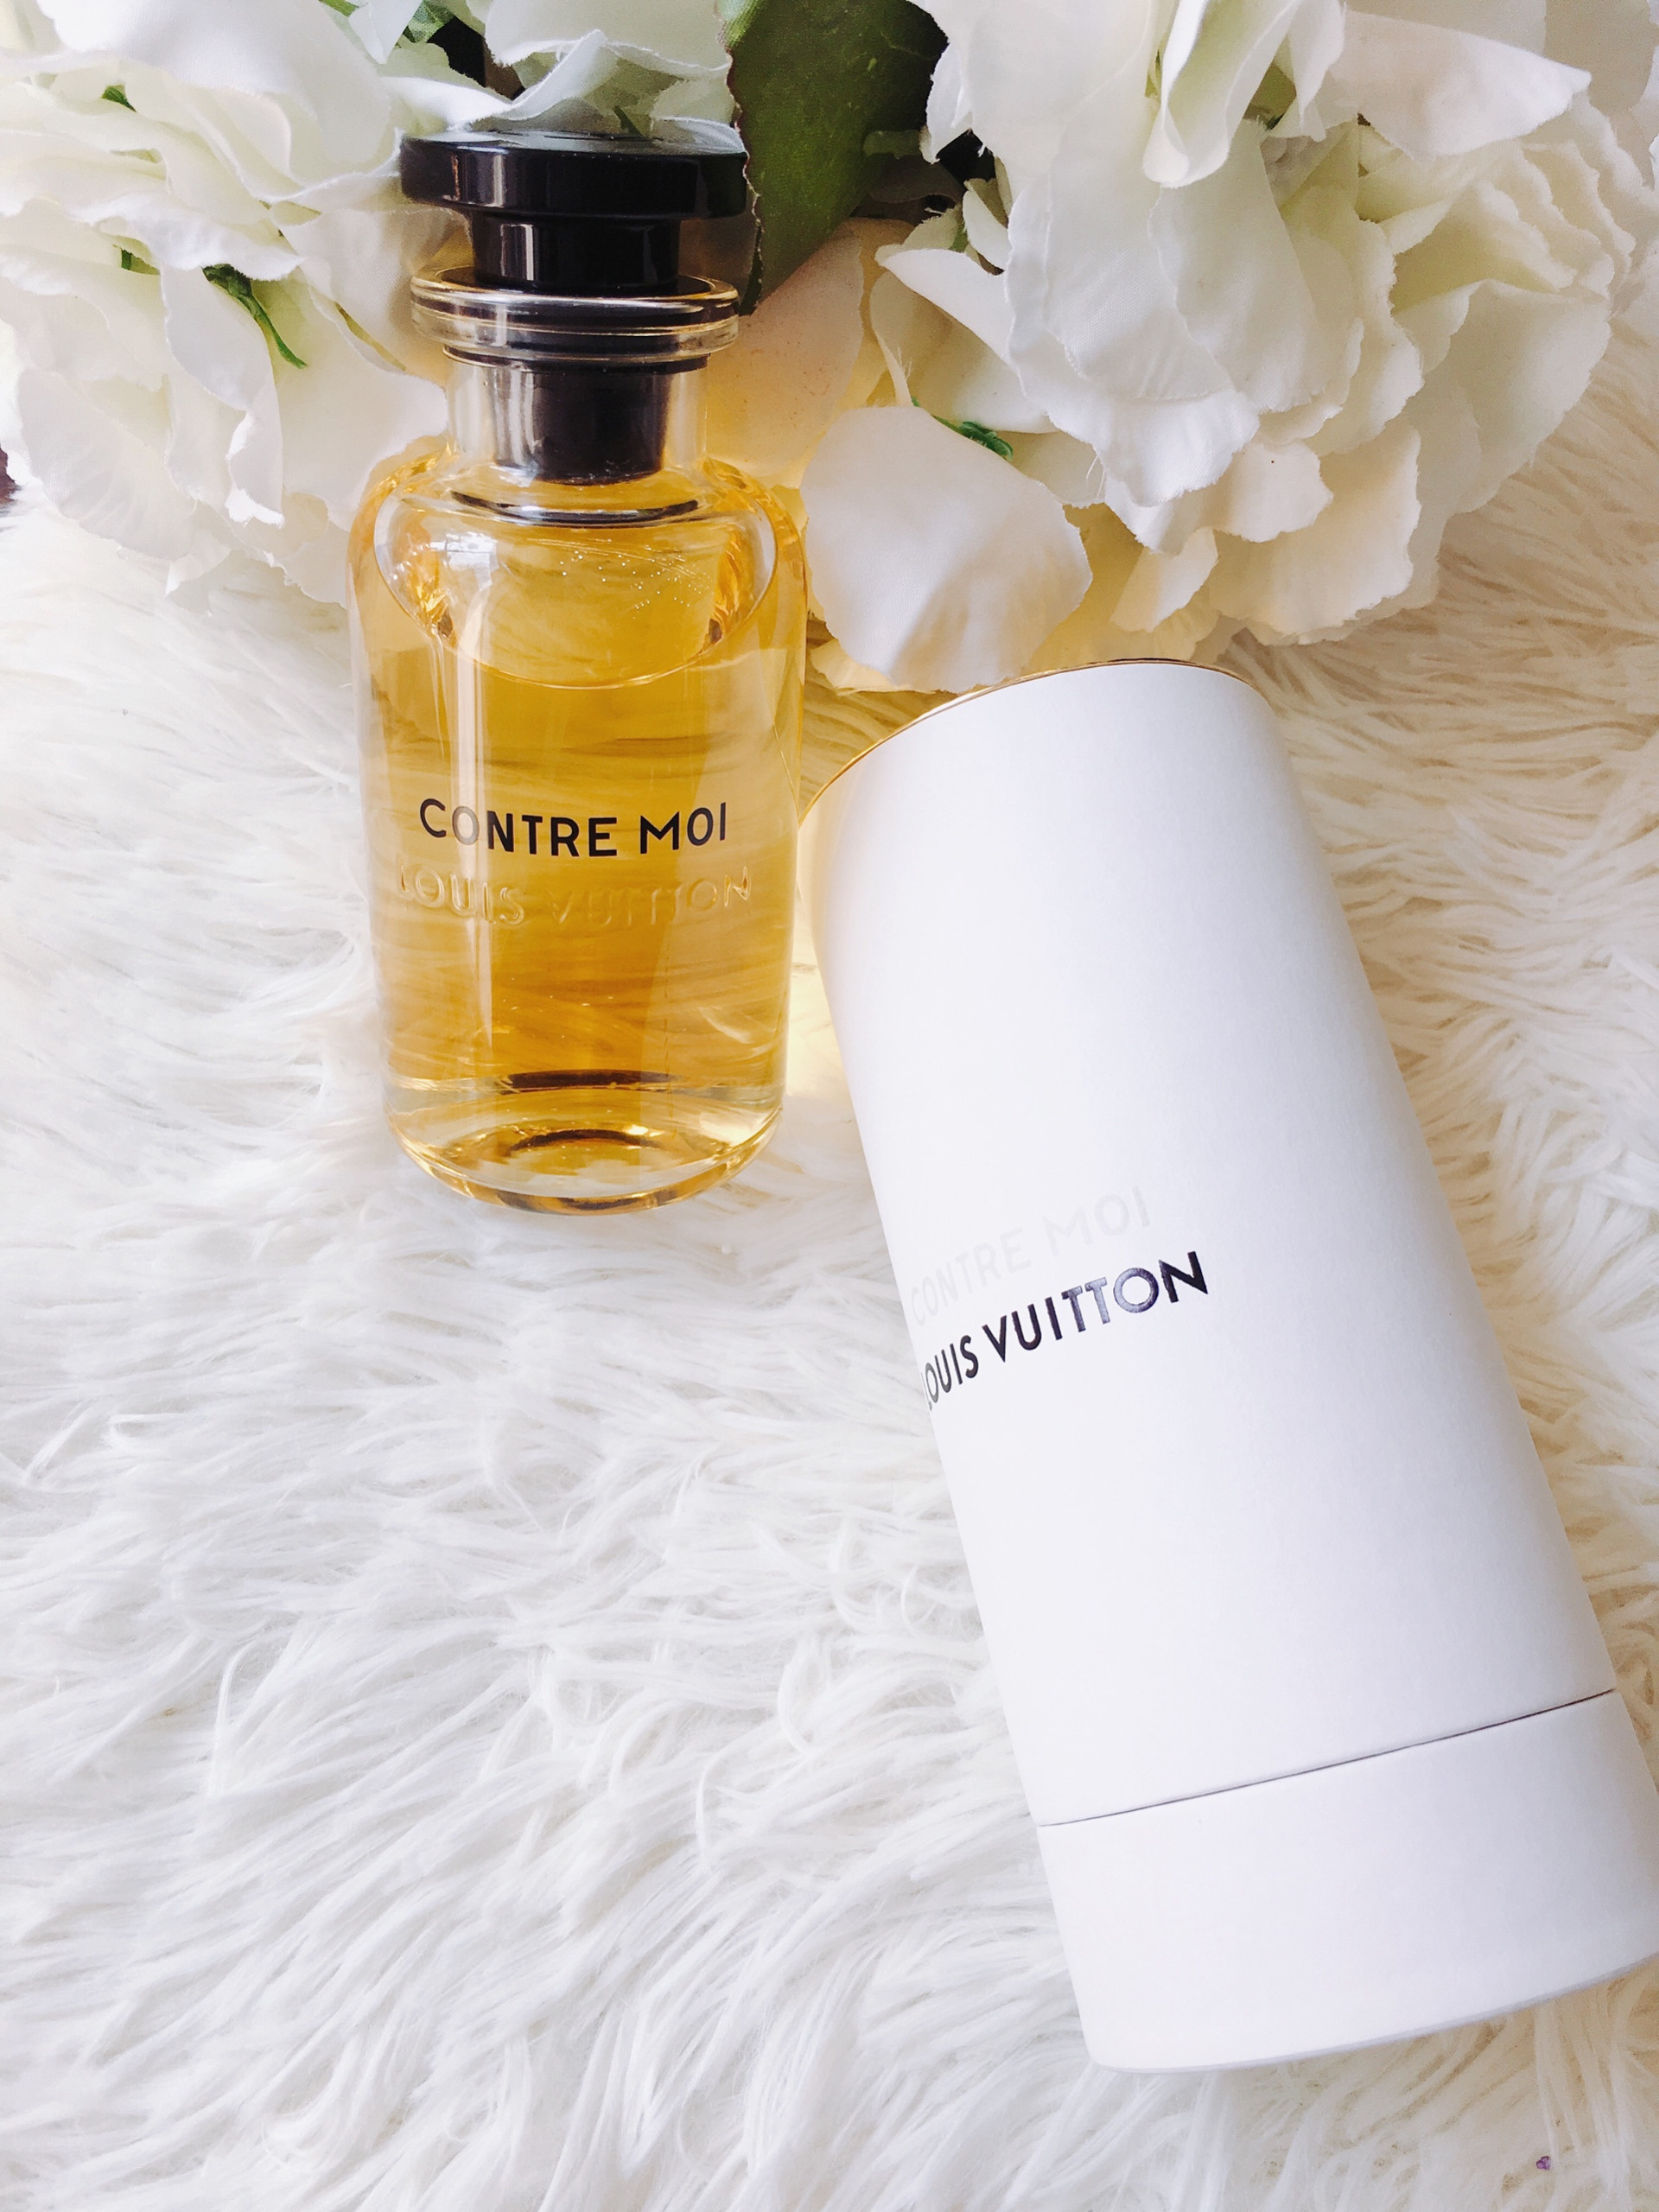 Our impression of Contre Moi Louis Vuitton for Women Premium Perfume Oils  (6148)